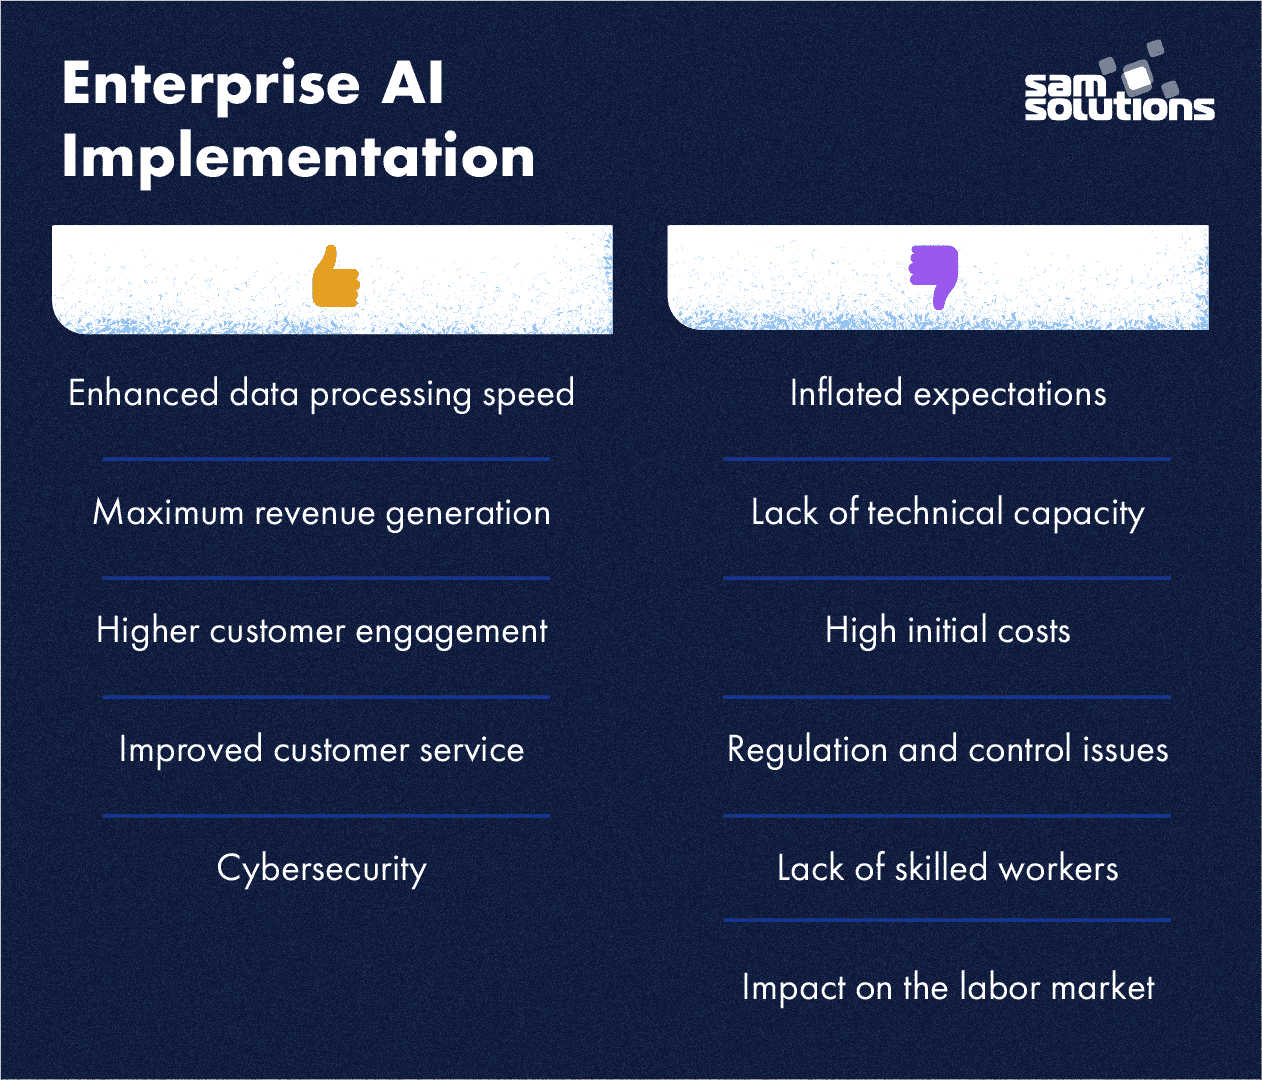 Enterprise-AI-benefits-and-challenges